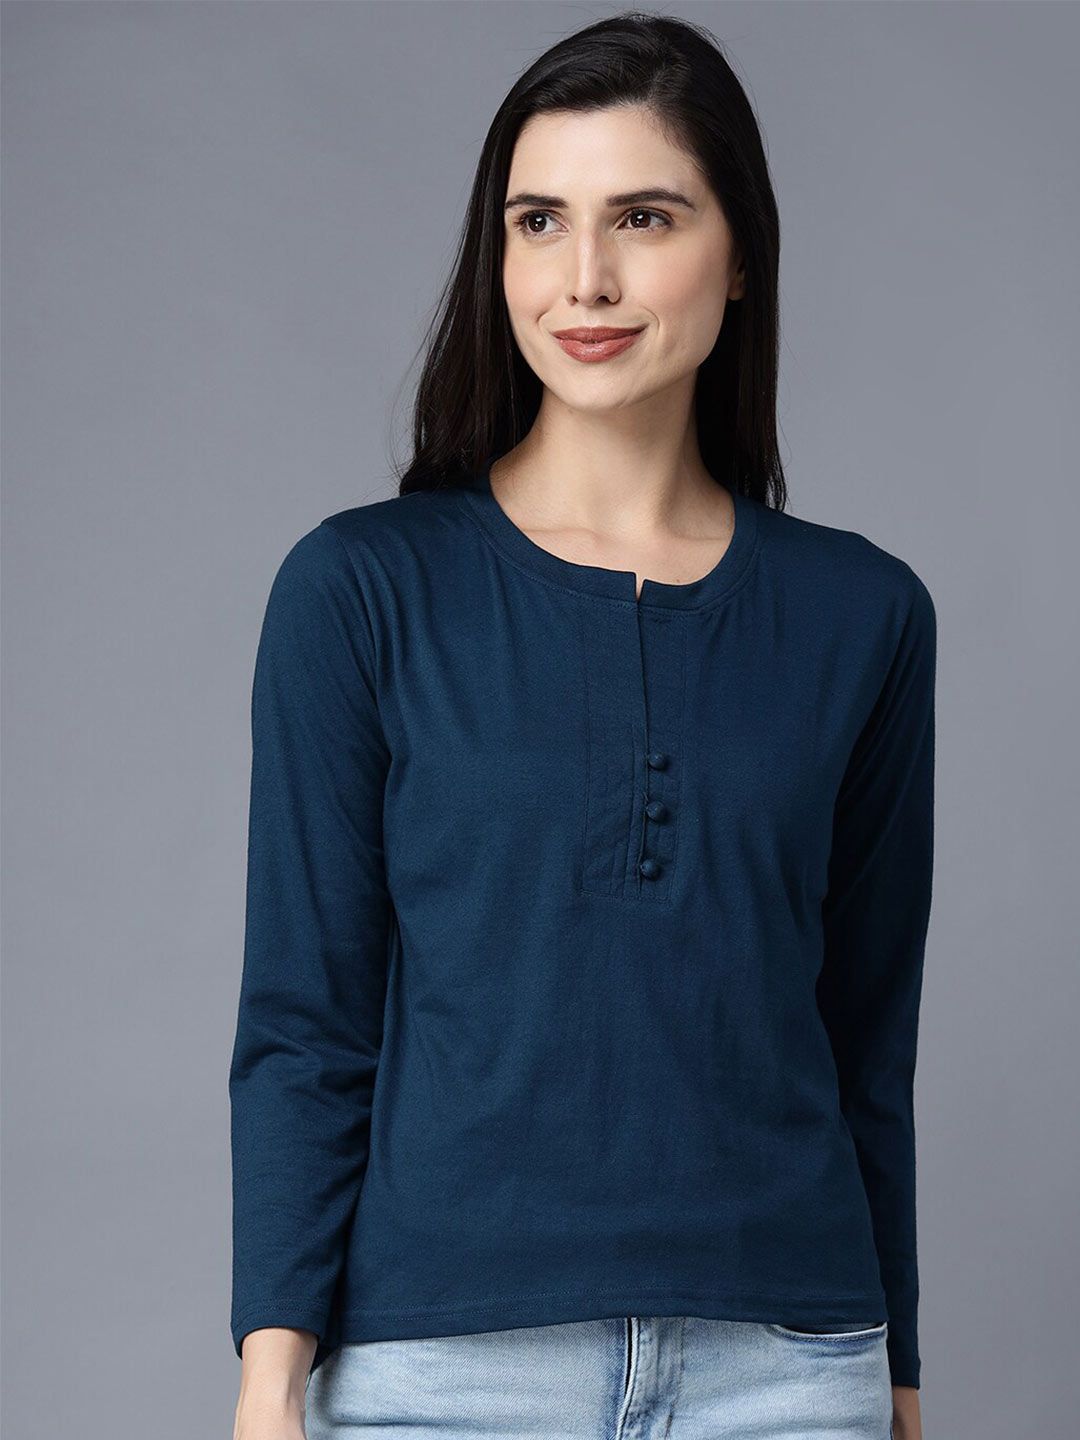 THE EG STORE Women Navy Blue T-shirt Price in India